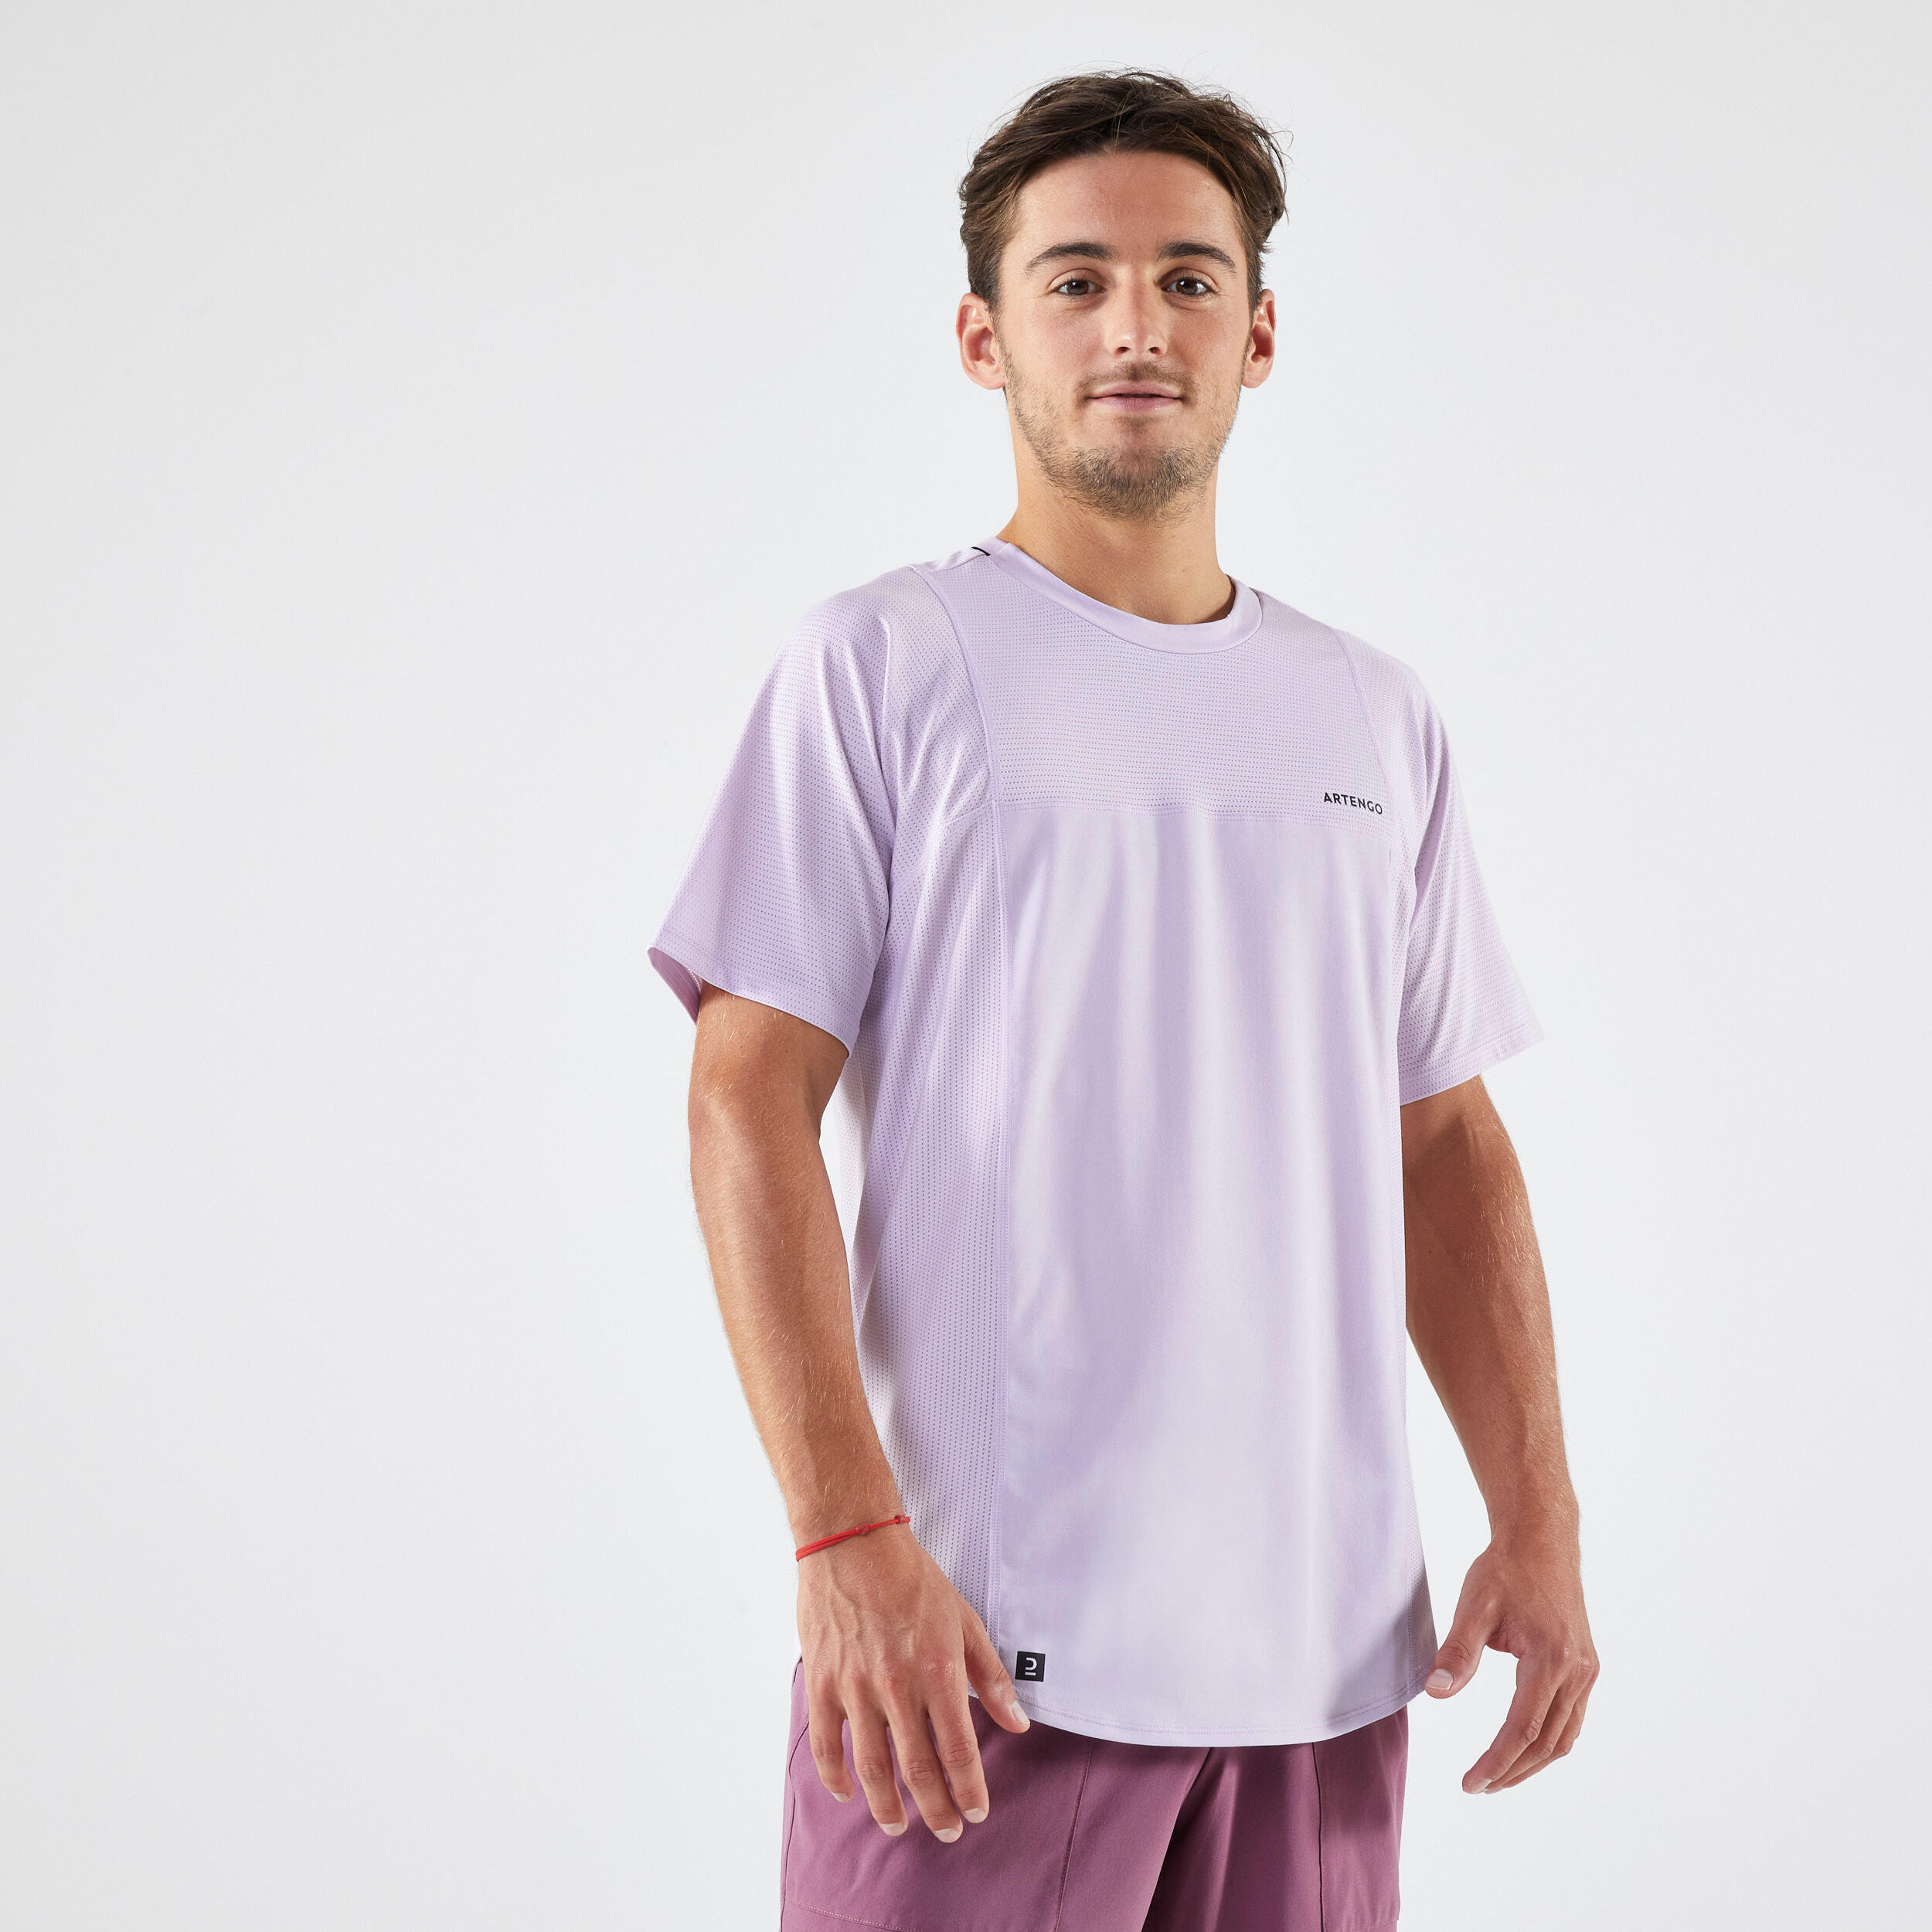 ARTENGO Men's Short-Sleeved Tennis T-Shirt Dry Gaël Monfils - Purple